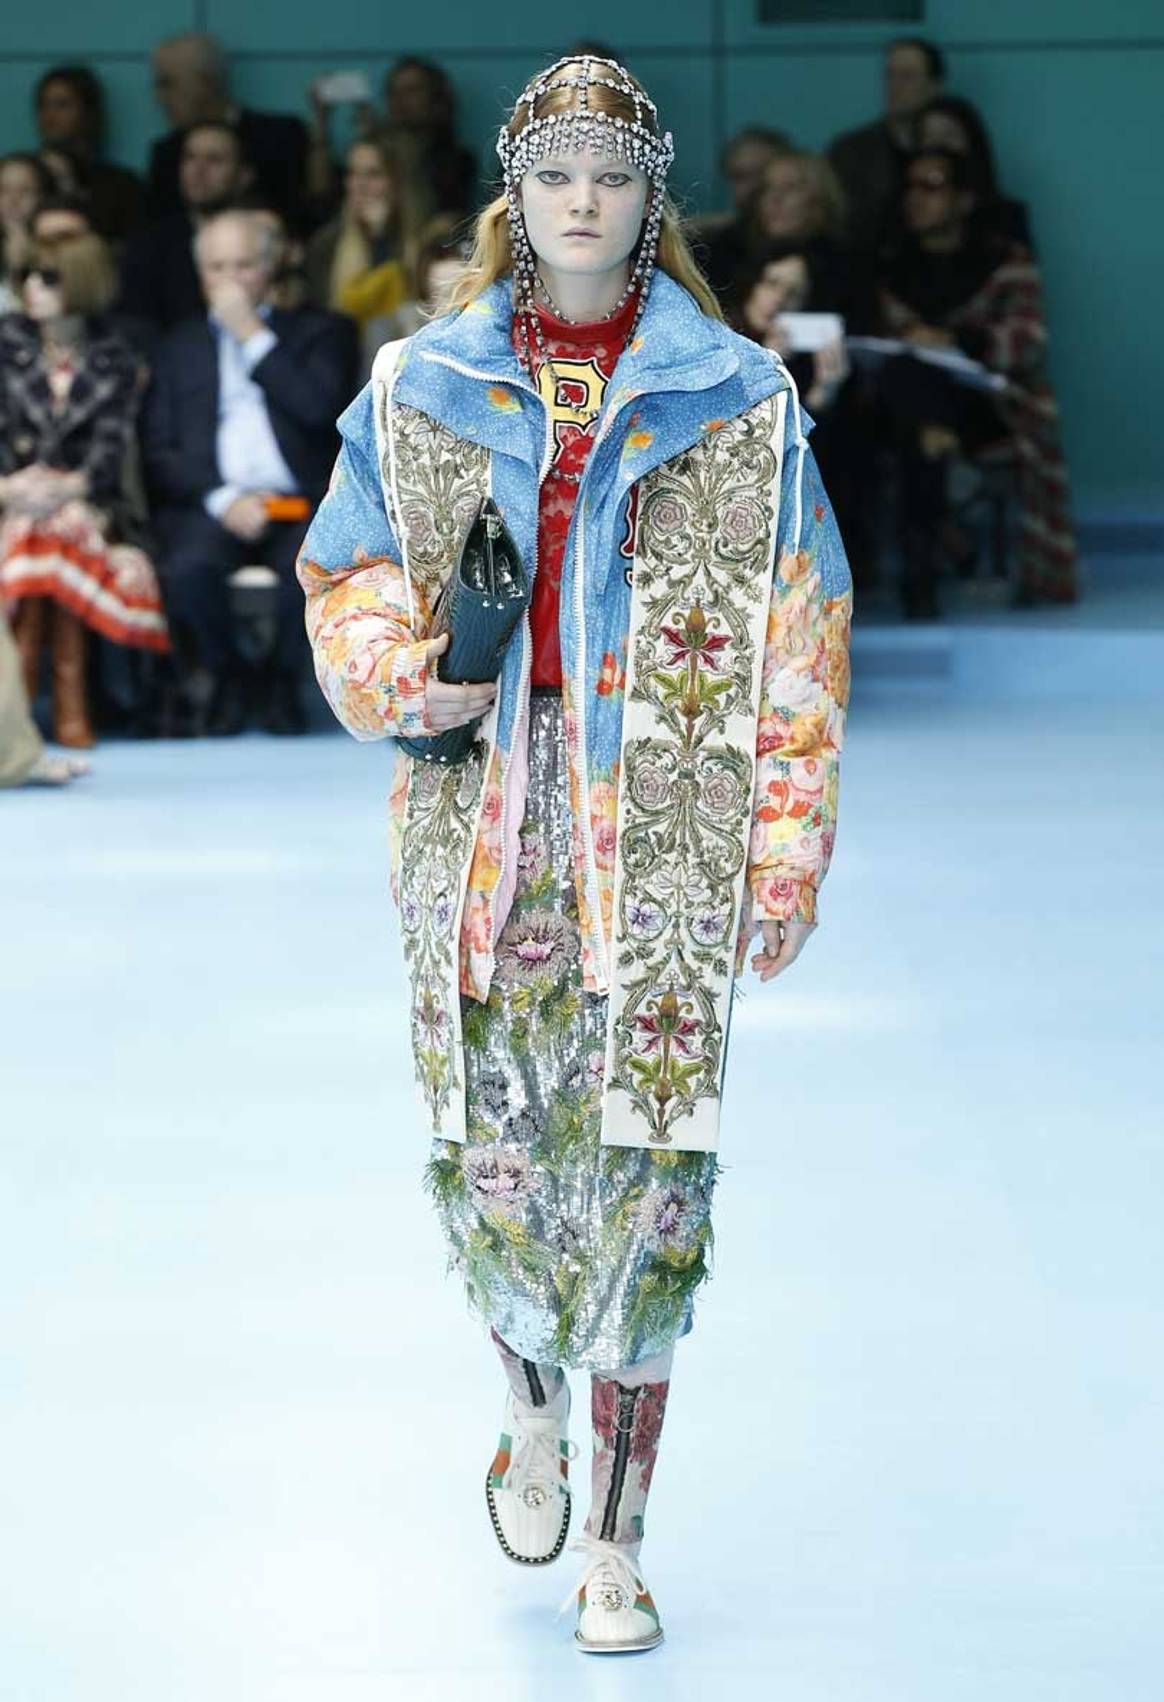 Milan Fashion Week: Models carry fake heads on Gucci catwalk - BBC